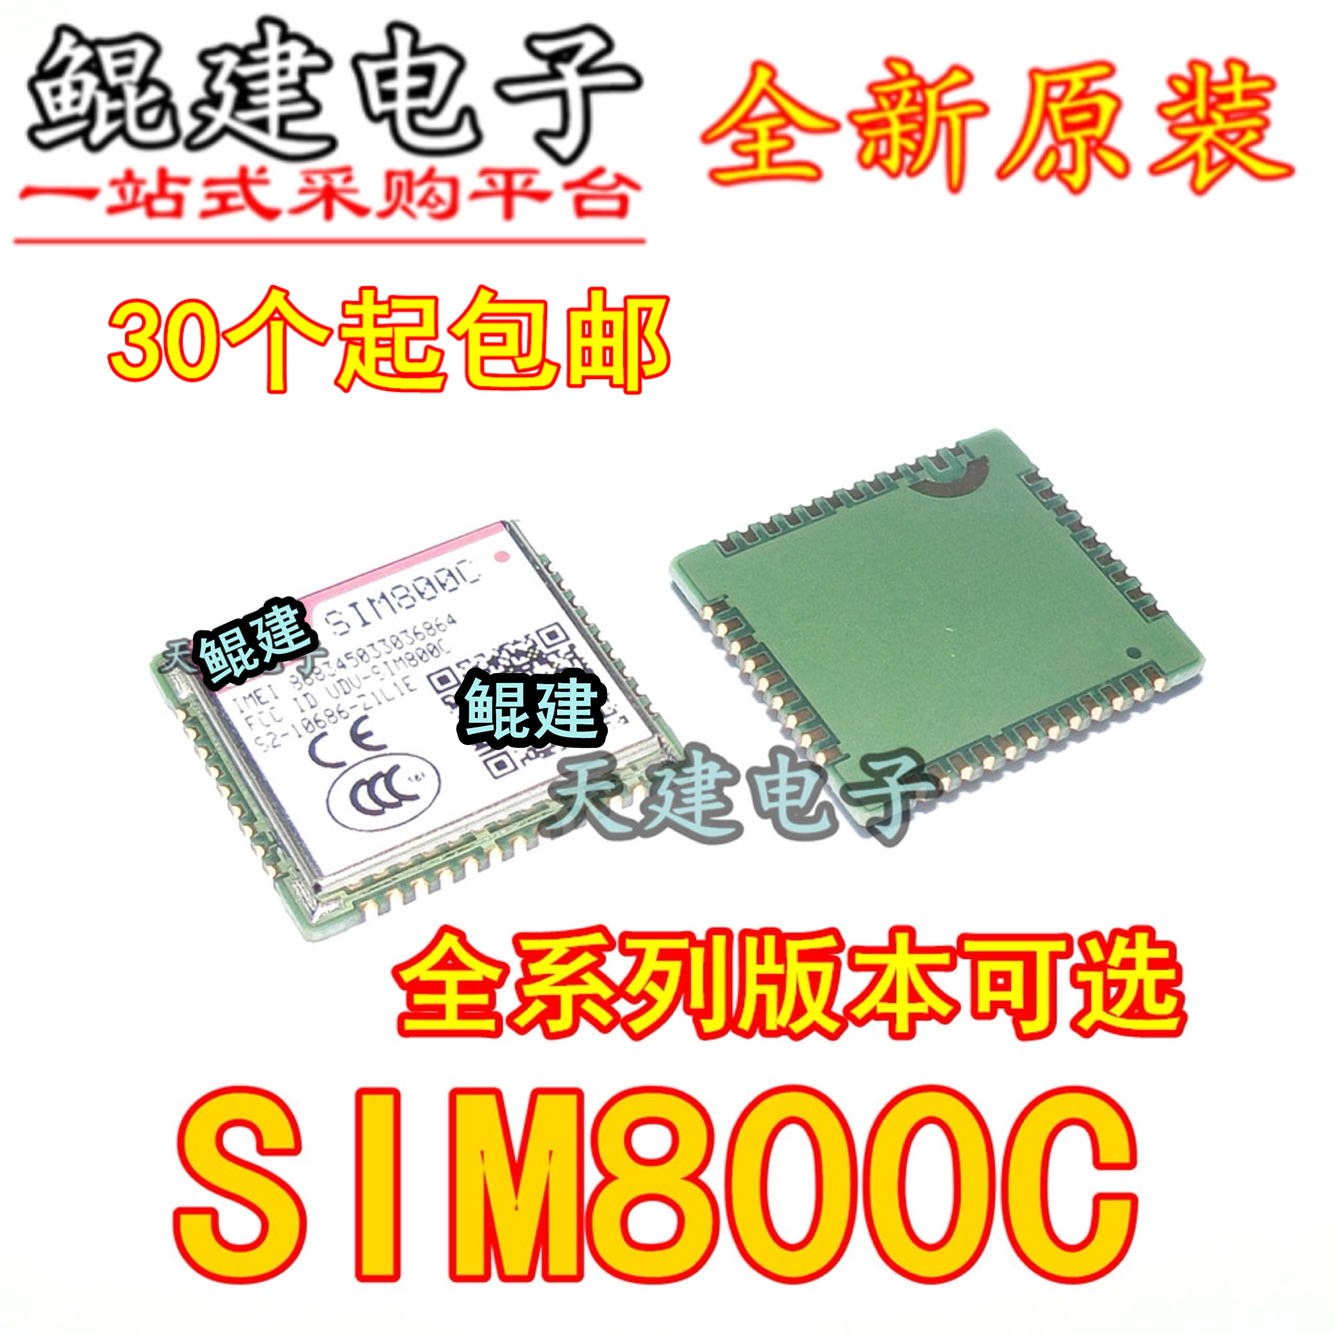 New original SIM800C chip quad-band voice SMS data transmission module GPRS+Bluetooth R800C